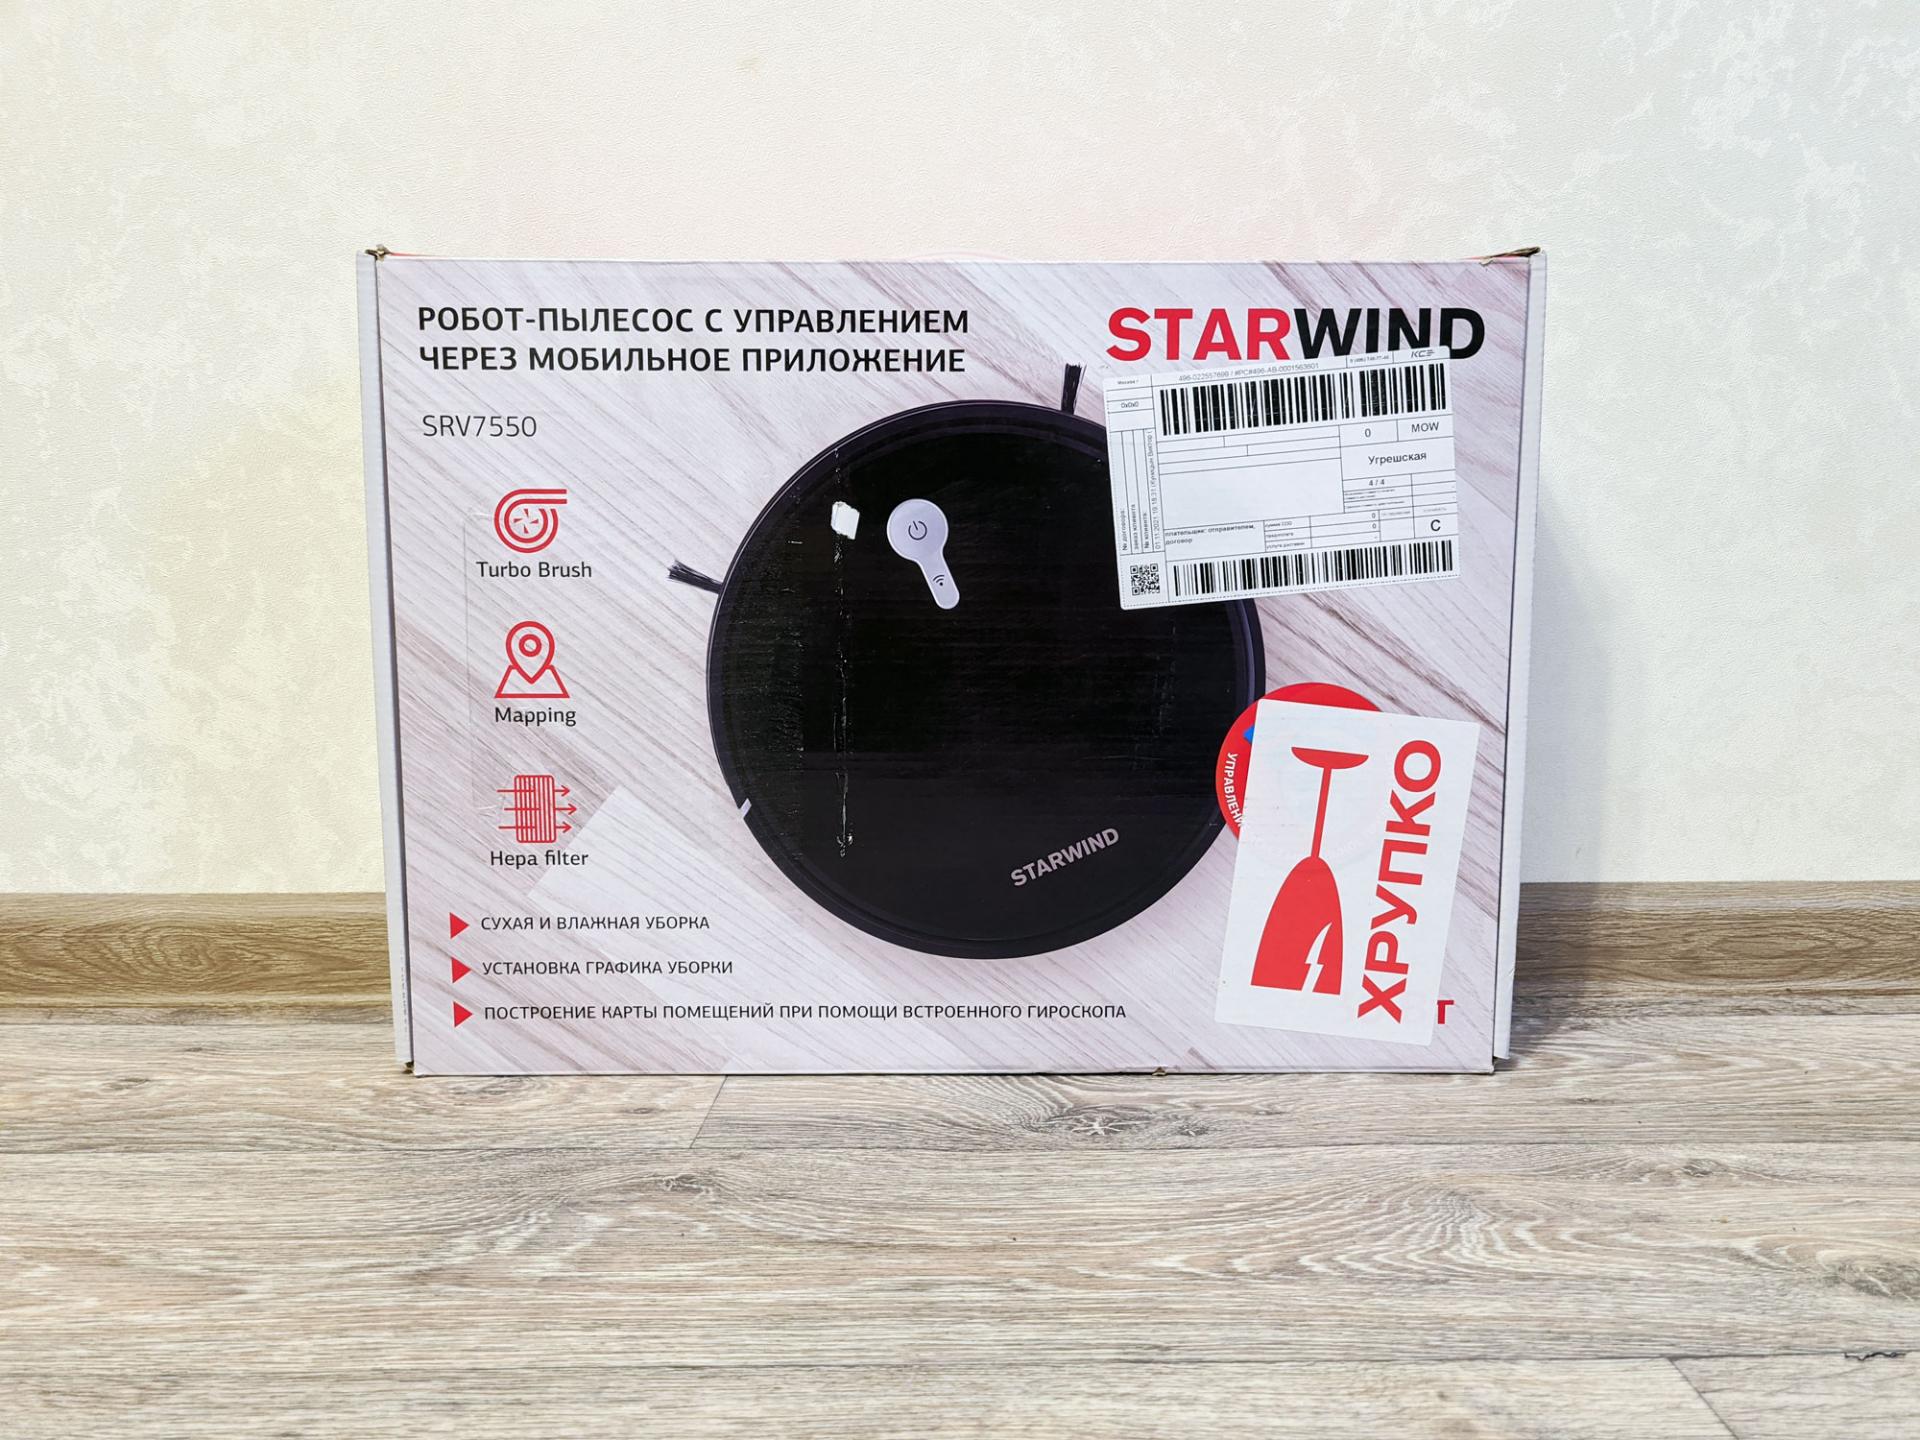 Тест-драйв робота-пылесоса STARWIND SRV7550